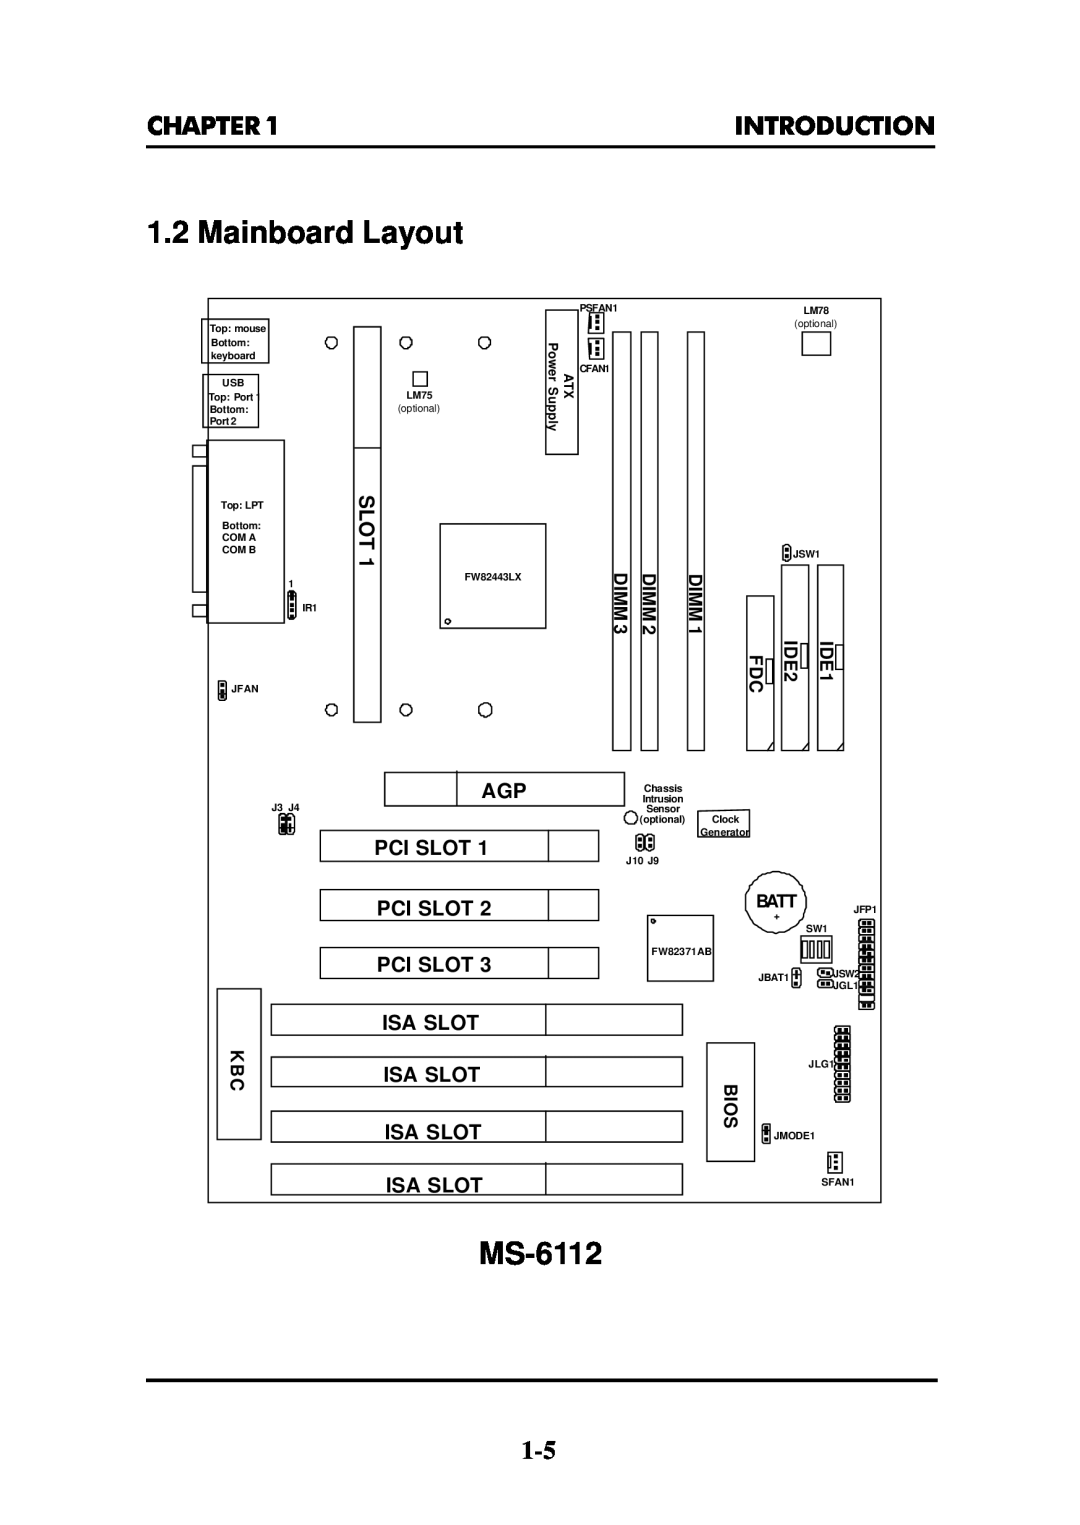 Intel MS-6112 manual Mainboard Layout, Slot, Dimm, IDE2, IDE1, Batt, Bios 